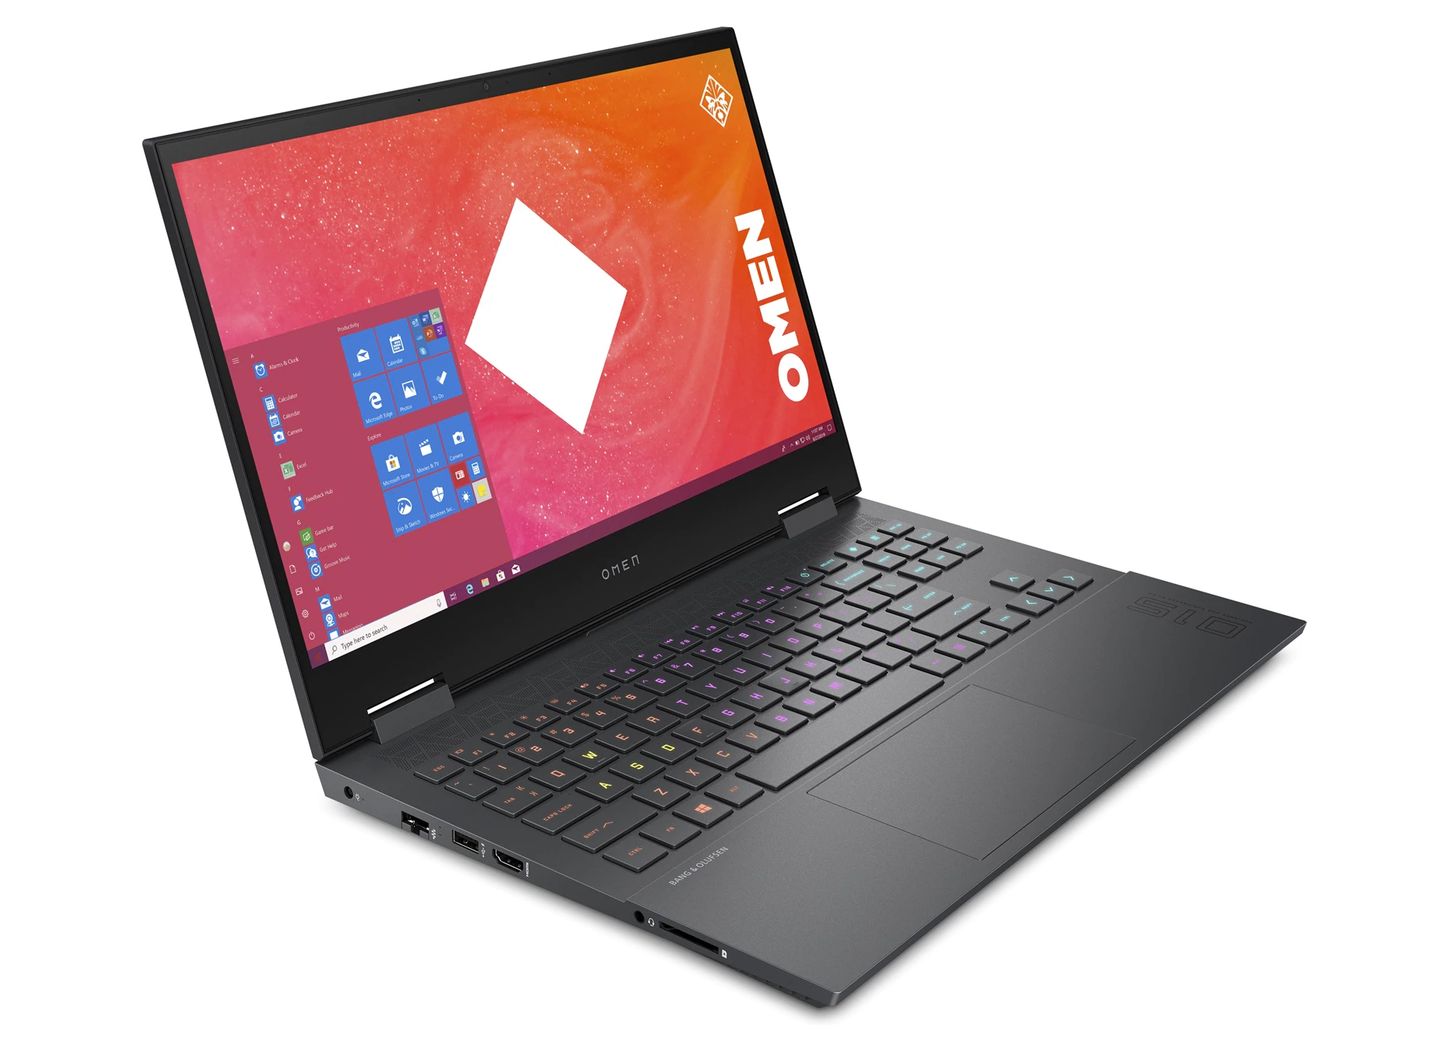 HP OMEN 15 (2020) laptop features Ryzen 7 4800H and GeForce RTX 2060